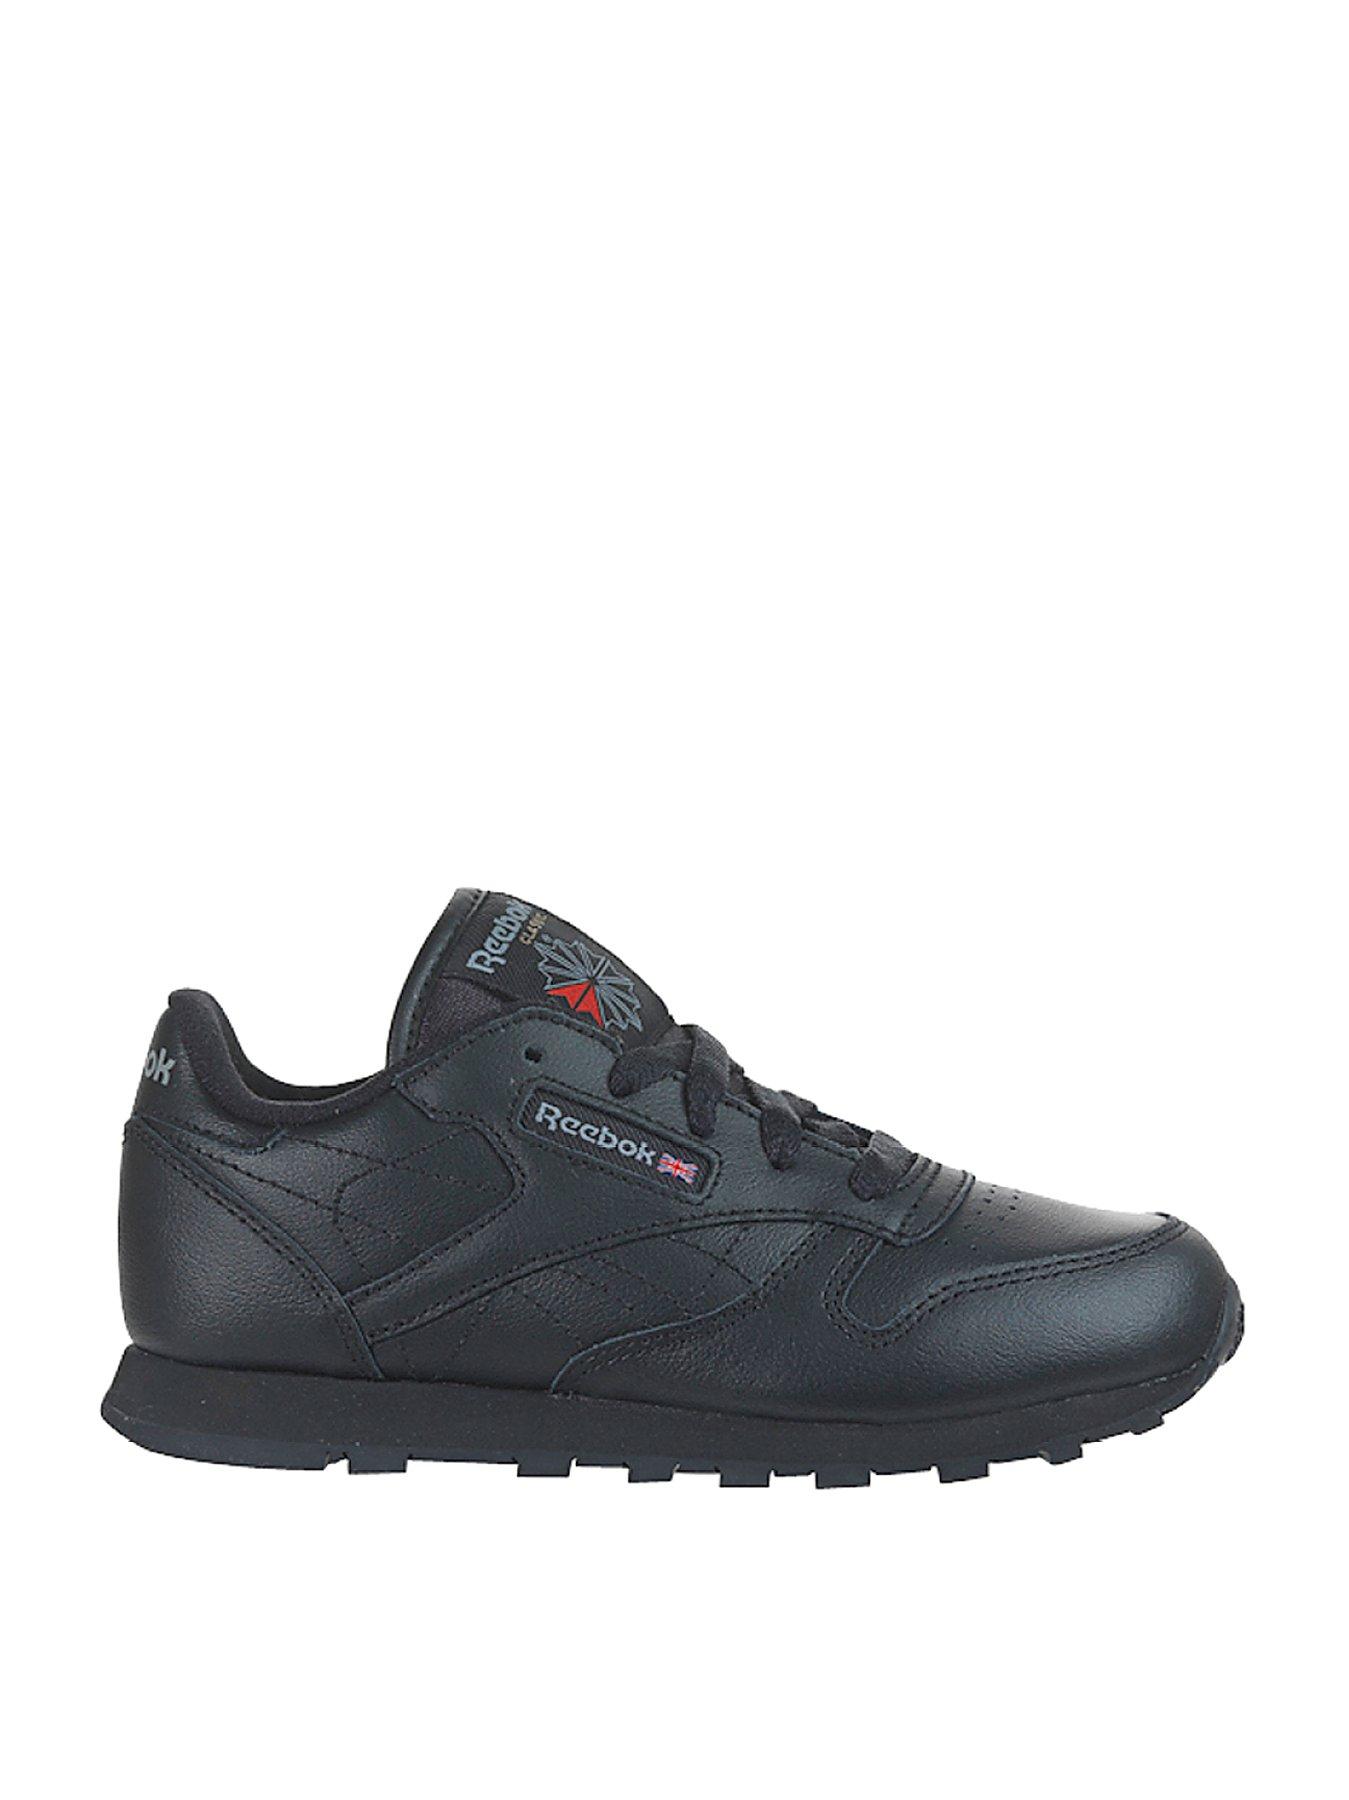 reebok classic leather trainers black